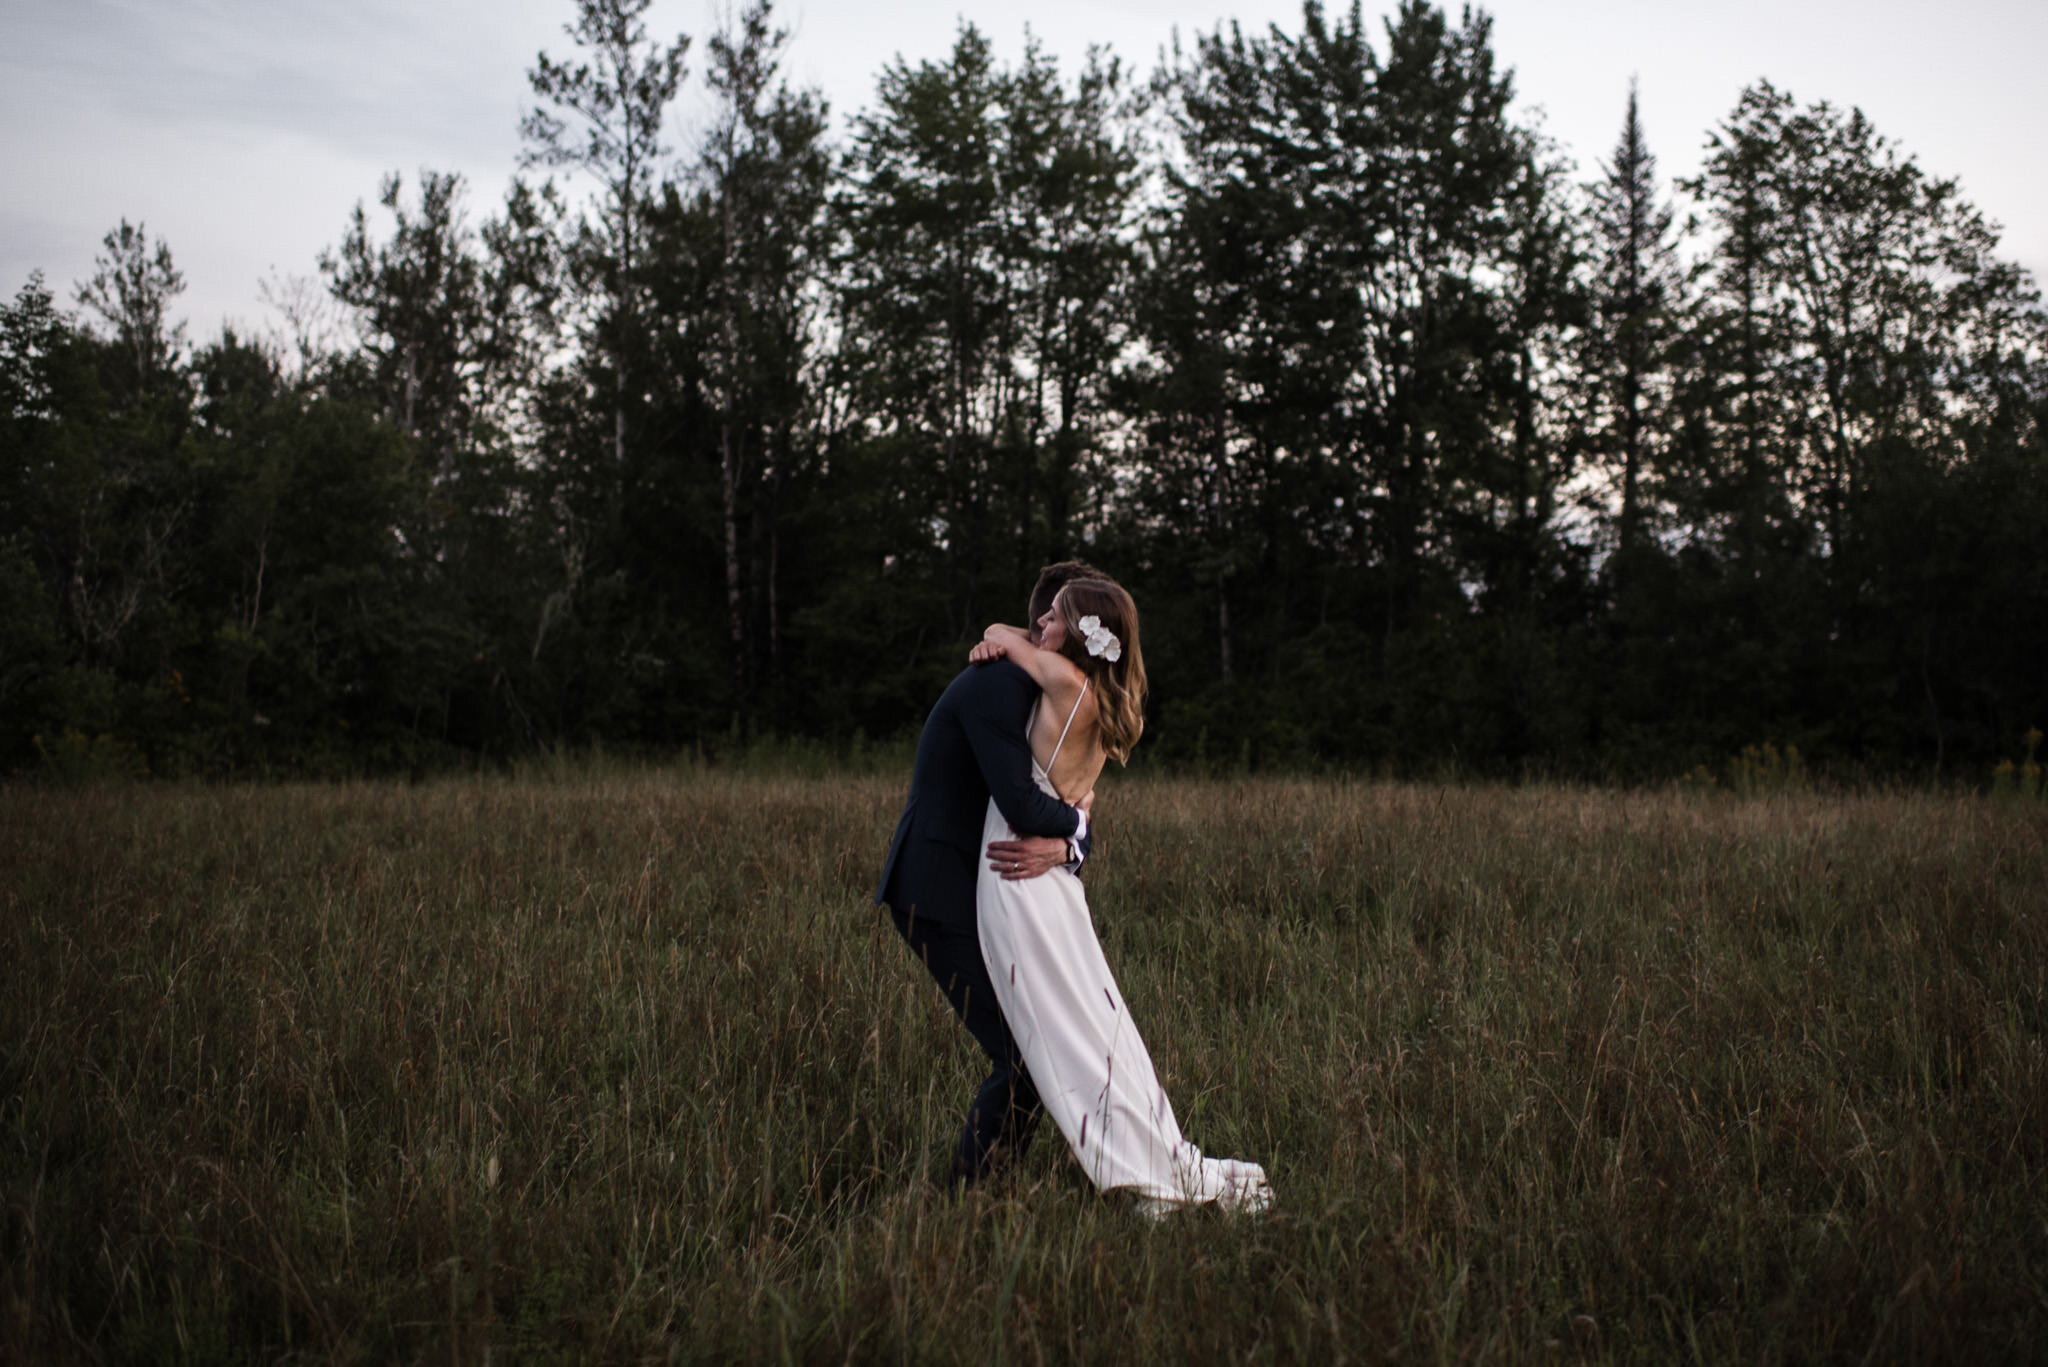 085-bride-groom-wedding-photos-in-field-at-sunset-toronto-romantic-black-white.jpg